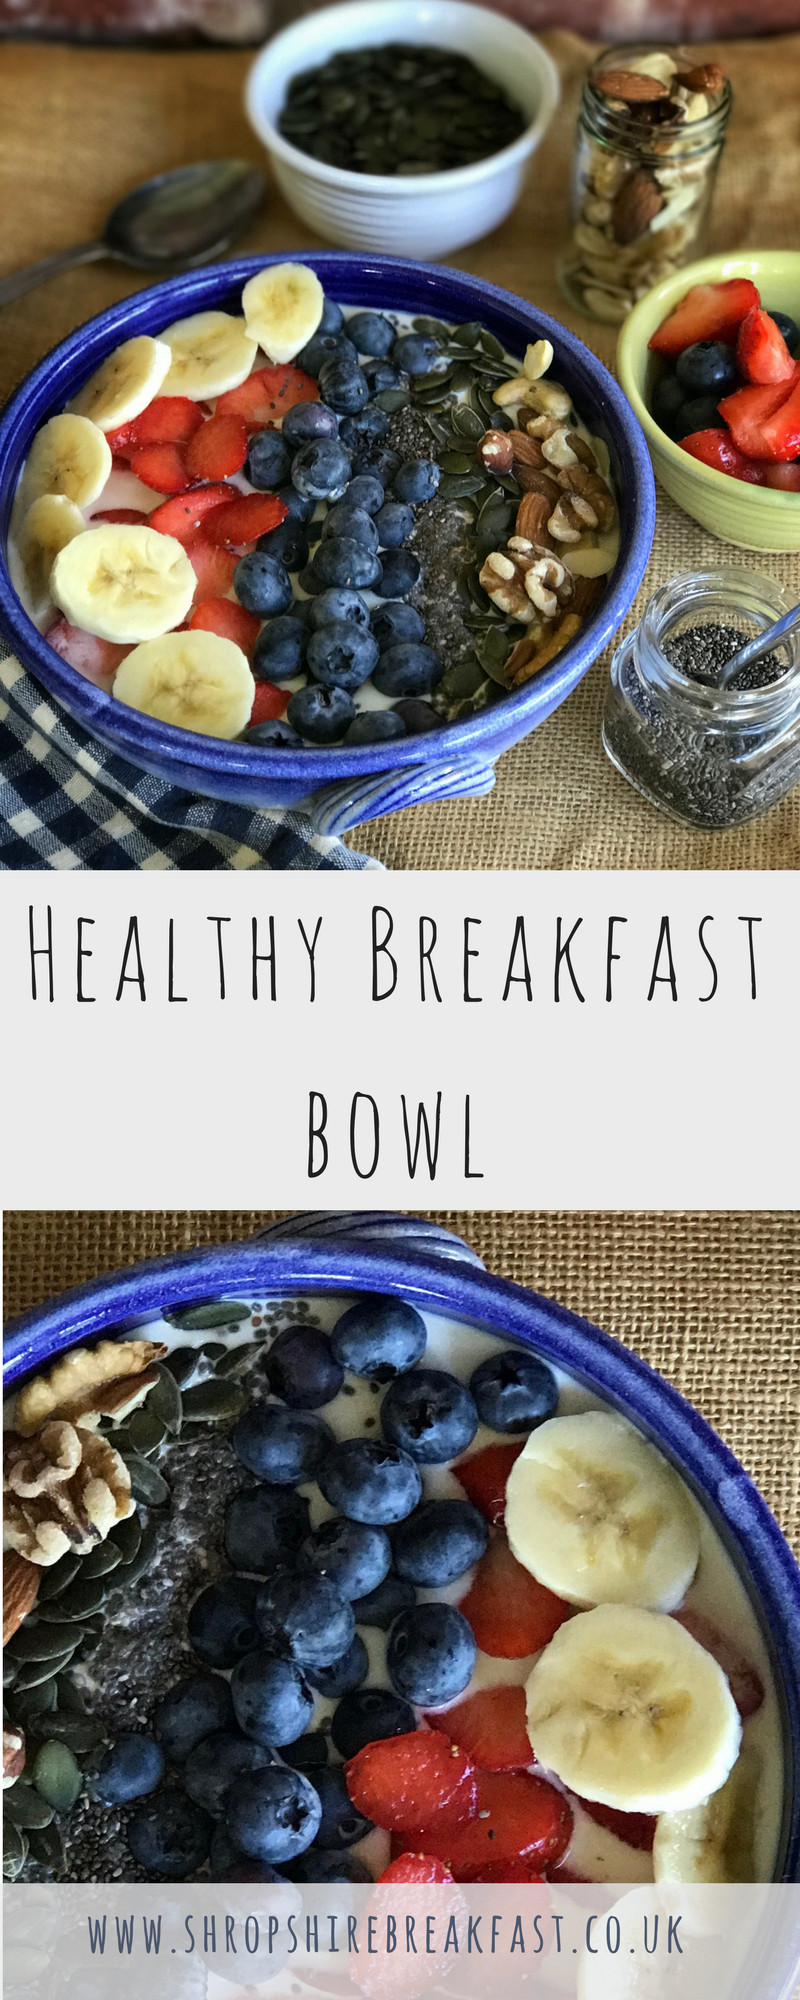 Healthy Choice Breakfast Bowls
 Healthy Breakfast Bowl Shropshire Breakfast